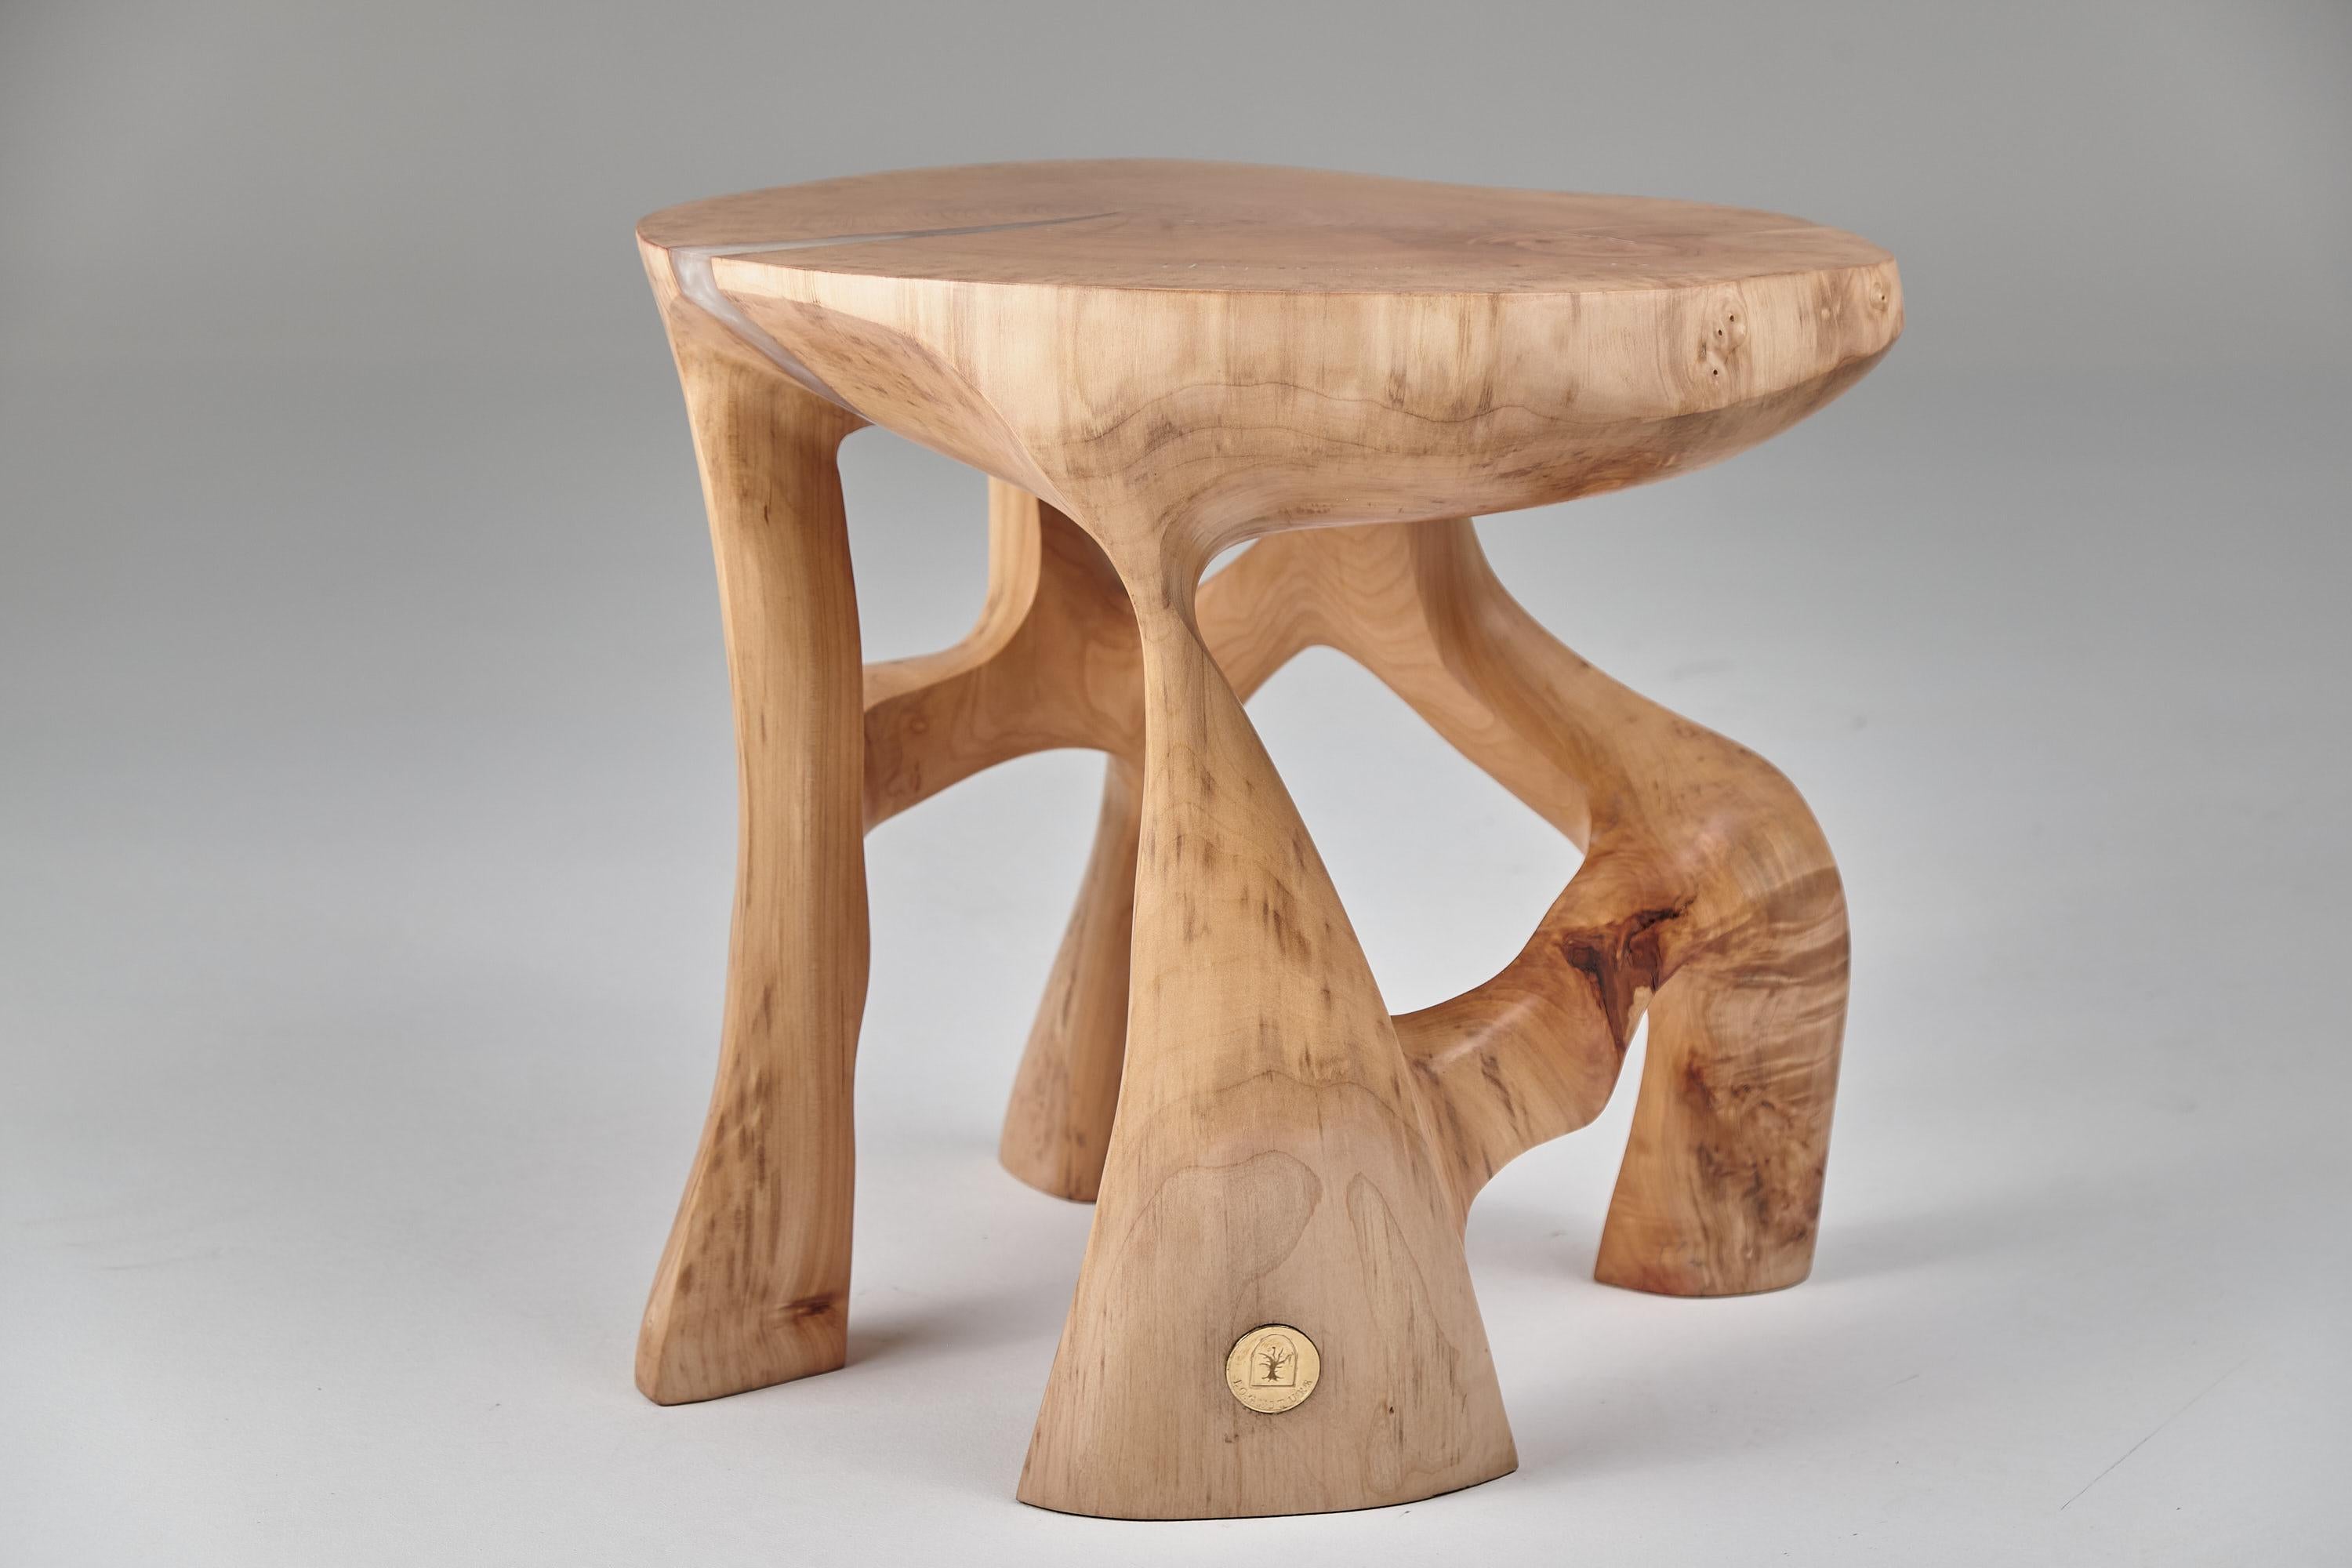 Carved Satyrs, Solid Wood Sculptural Side, Table Original Contemporary Design, Lognitur